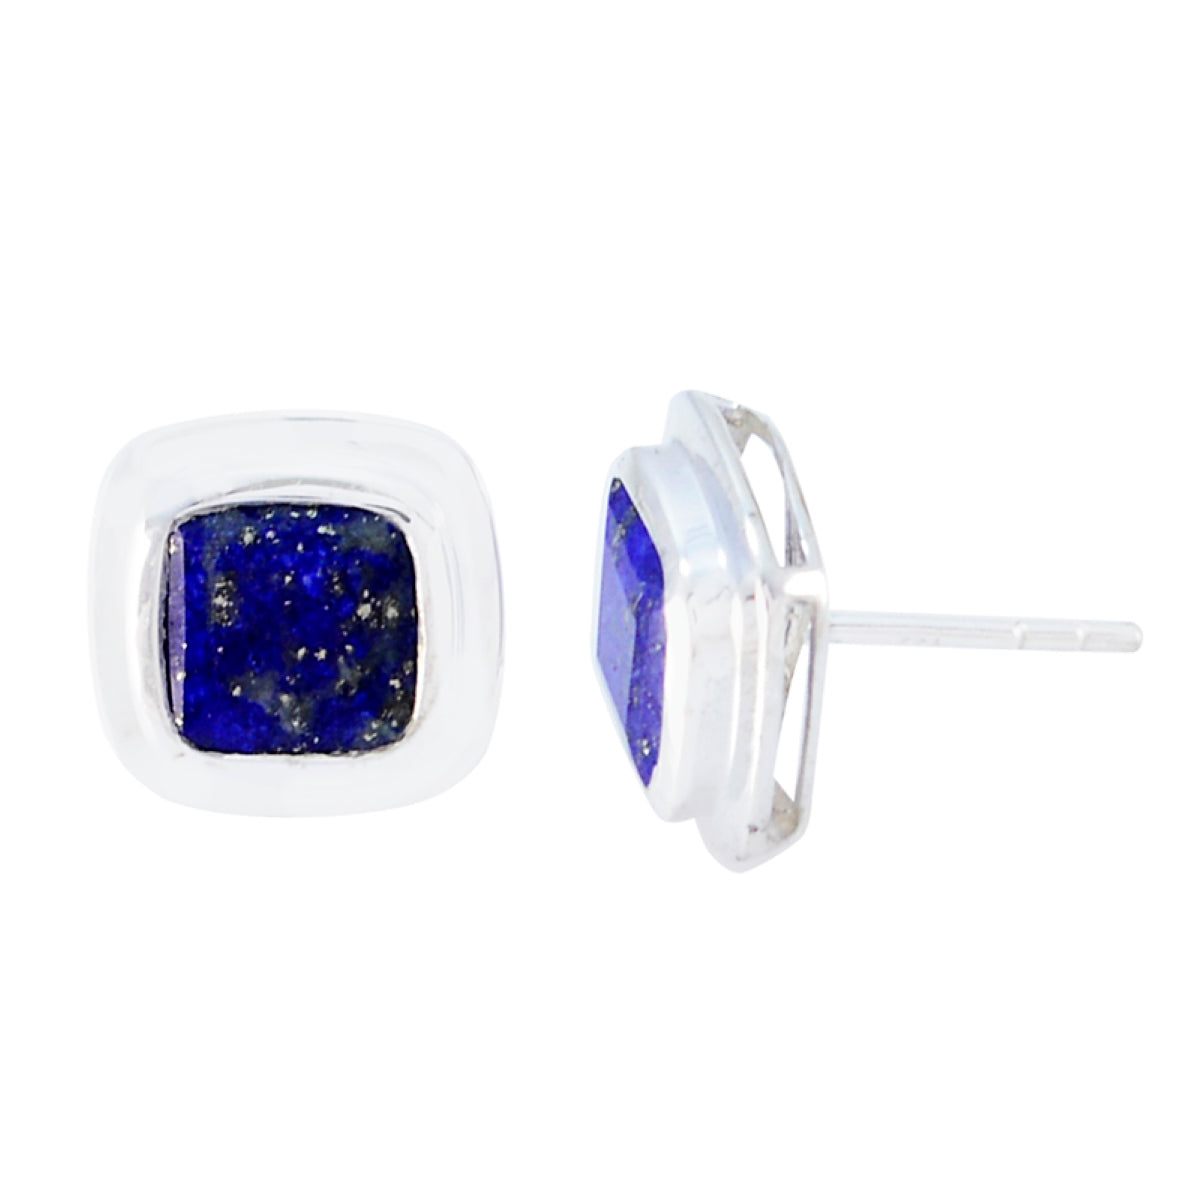 Riyo Good Gemstones Octogon Faceted Nevy Blue Lapis Lazuli Silver Earring graduation gift